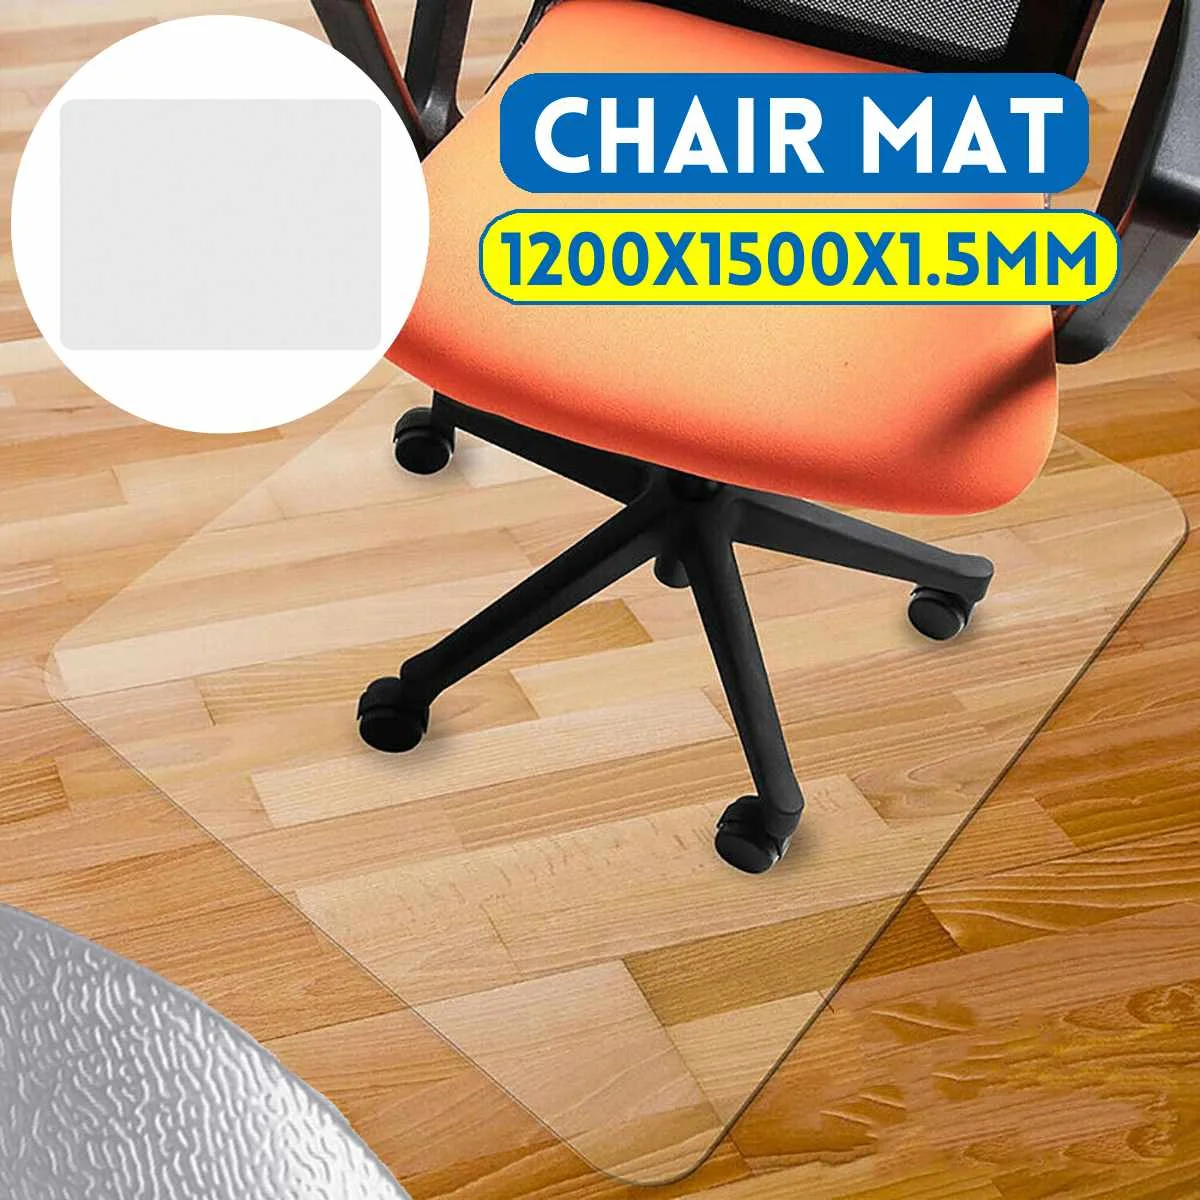 Home Office PVC Chair Mat for Carpet Floor Protection Computer Desk Chair Mat 